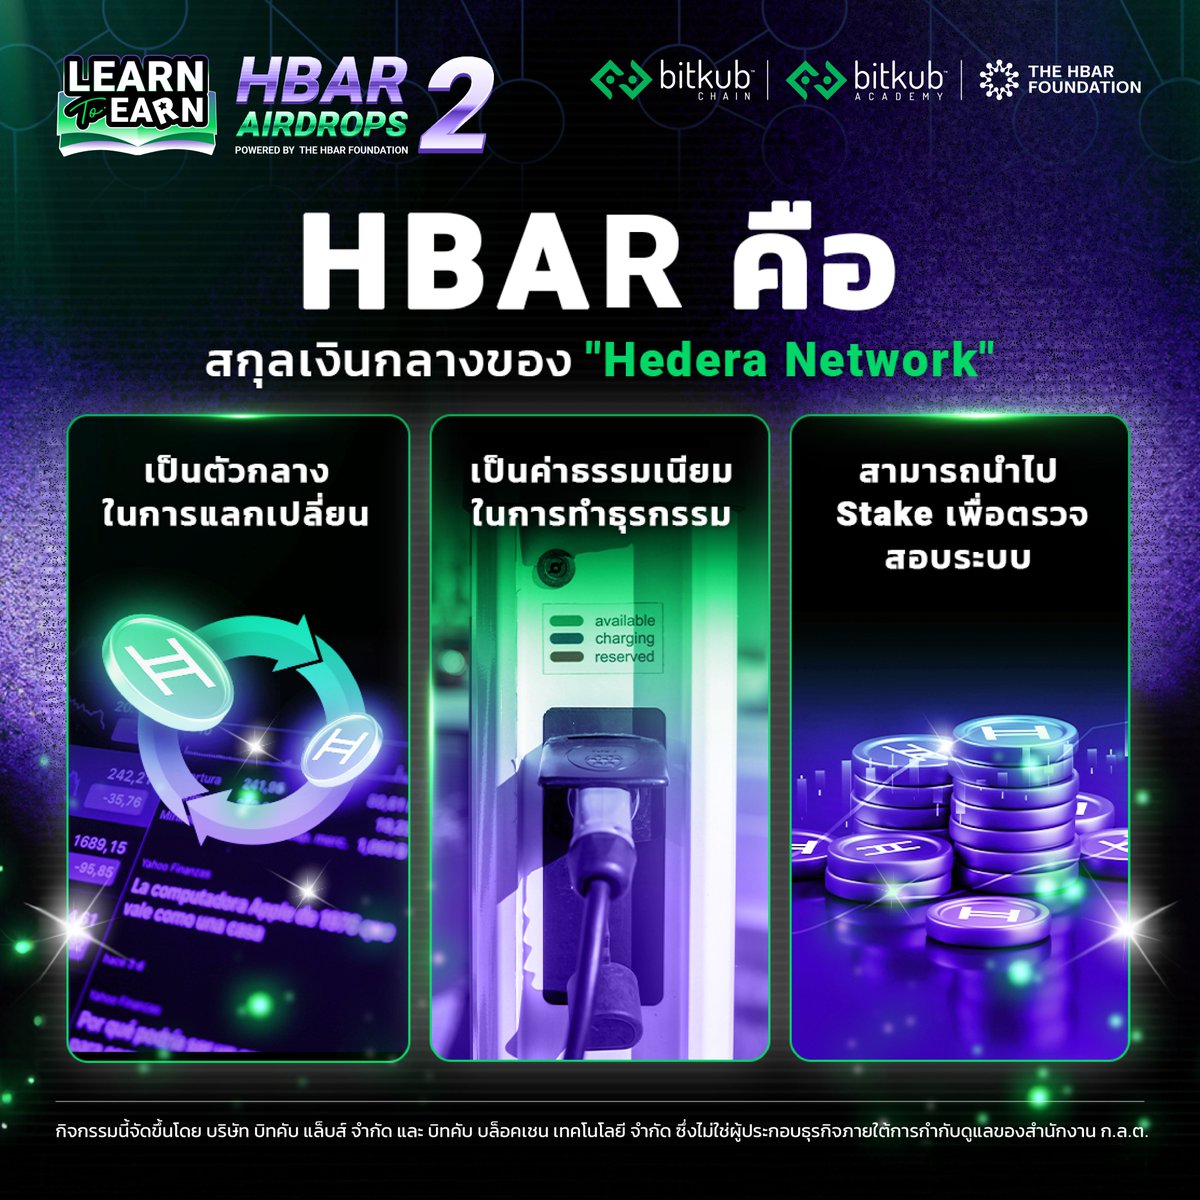 ⭐️HBAR is a leading cryptocurrency with a high market cap of 130 billion baht.

Let's take a look at what benefits and use cases it offers.🤔you know?

Learn more: bit.ly/3Ubaijh

#BitkubAcademy #BitkubNEXT #LearntoEarnHBARRound2 #HBAR  #ตอบถูกรับHBAR #BitkubChain